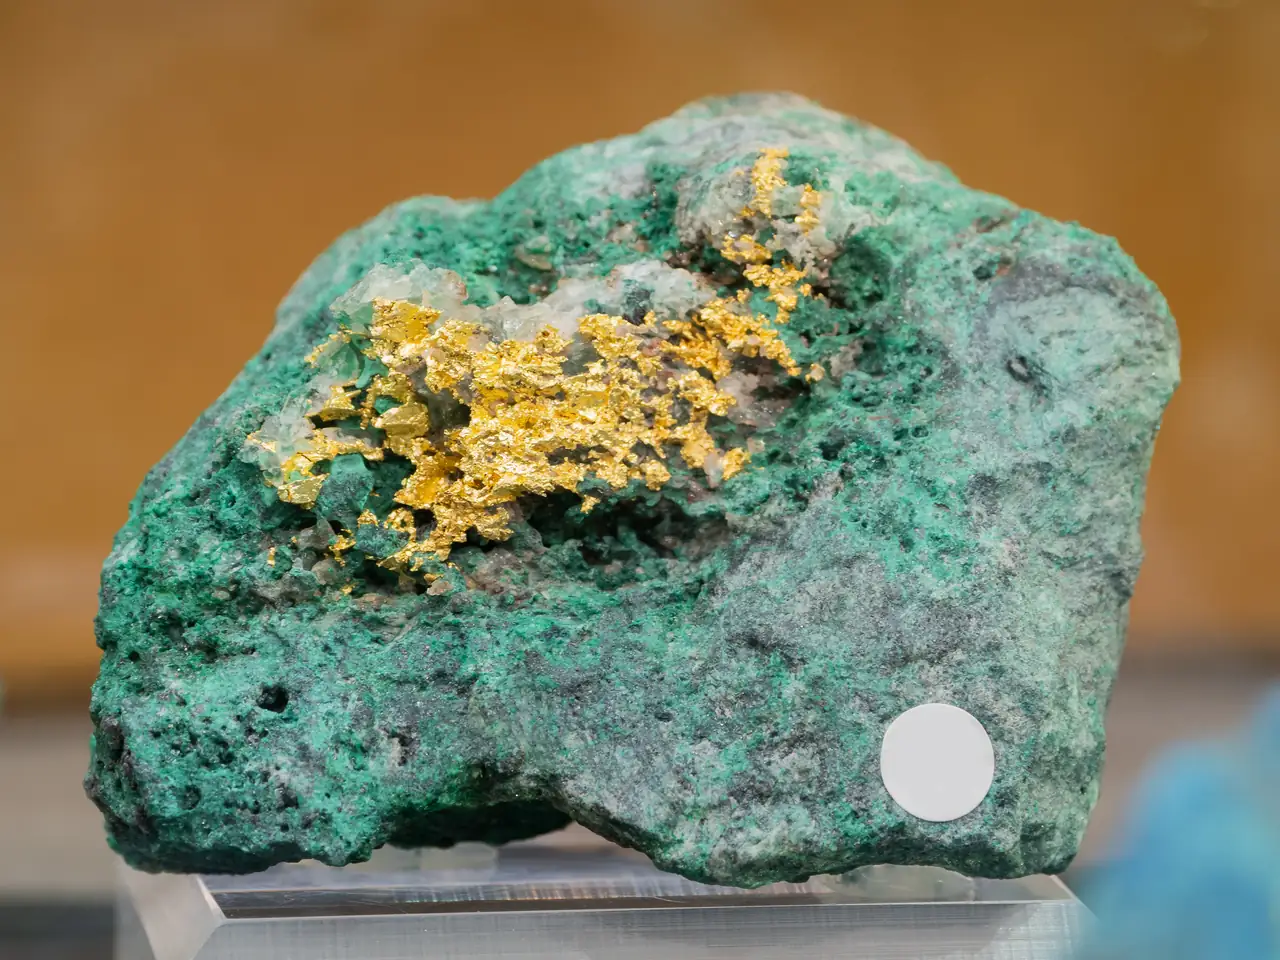 Native gold aggregate sitting on bright green shattuckite from Kaokoveld, Namibia